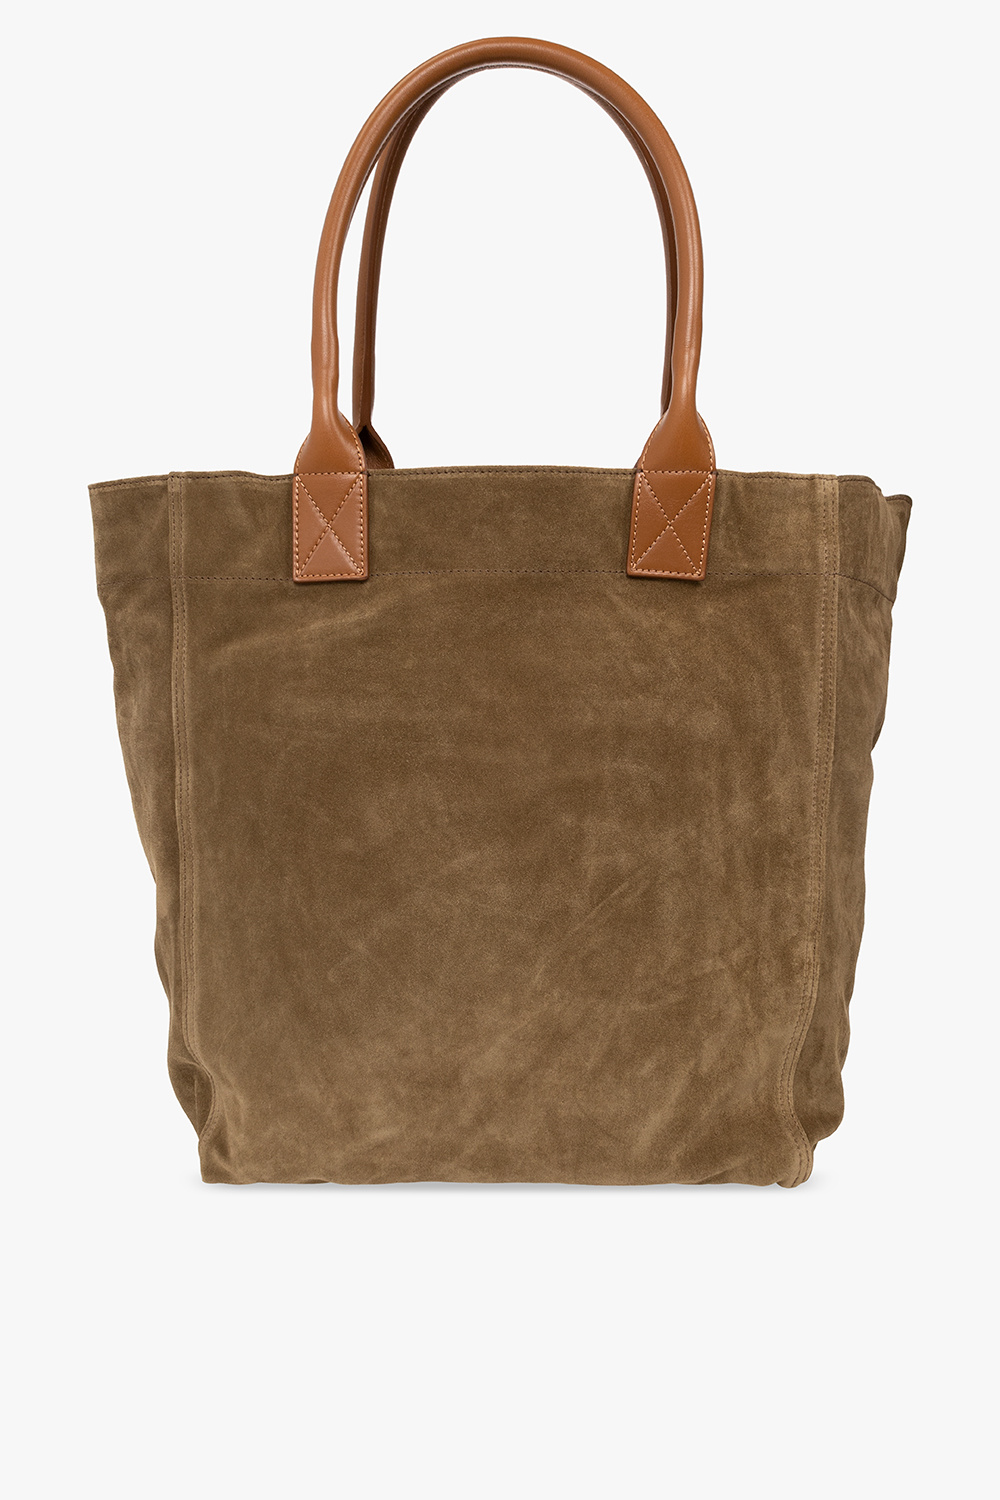 Isabel Marant ‘Yenky’ shopper Handtasche bag